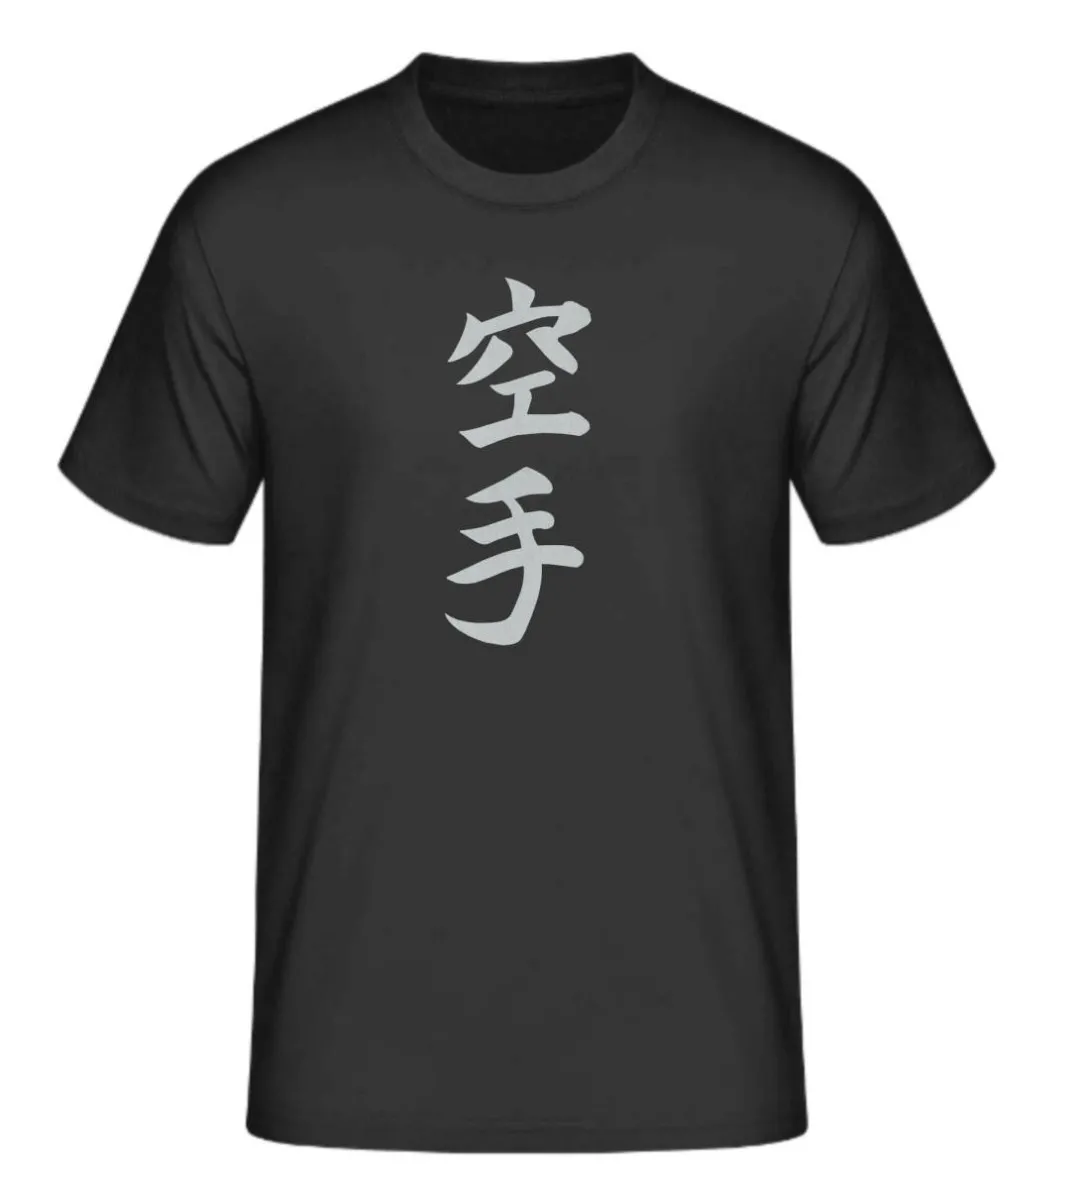 T-Shirt black with silver Kanji Karate, Judo, Aukido, Taekwondo